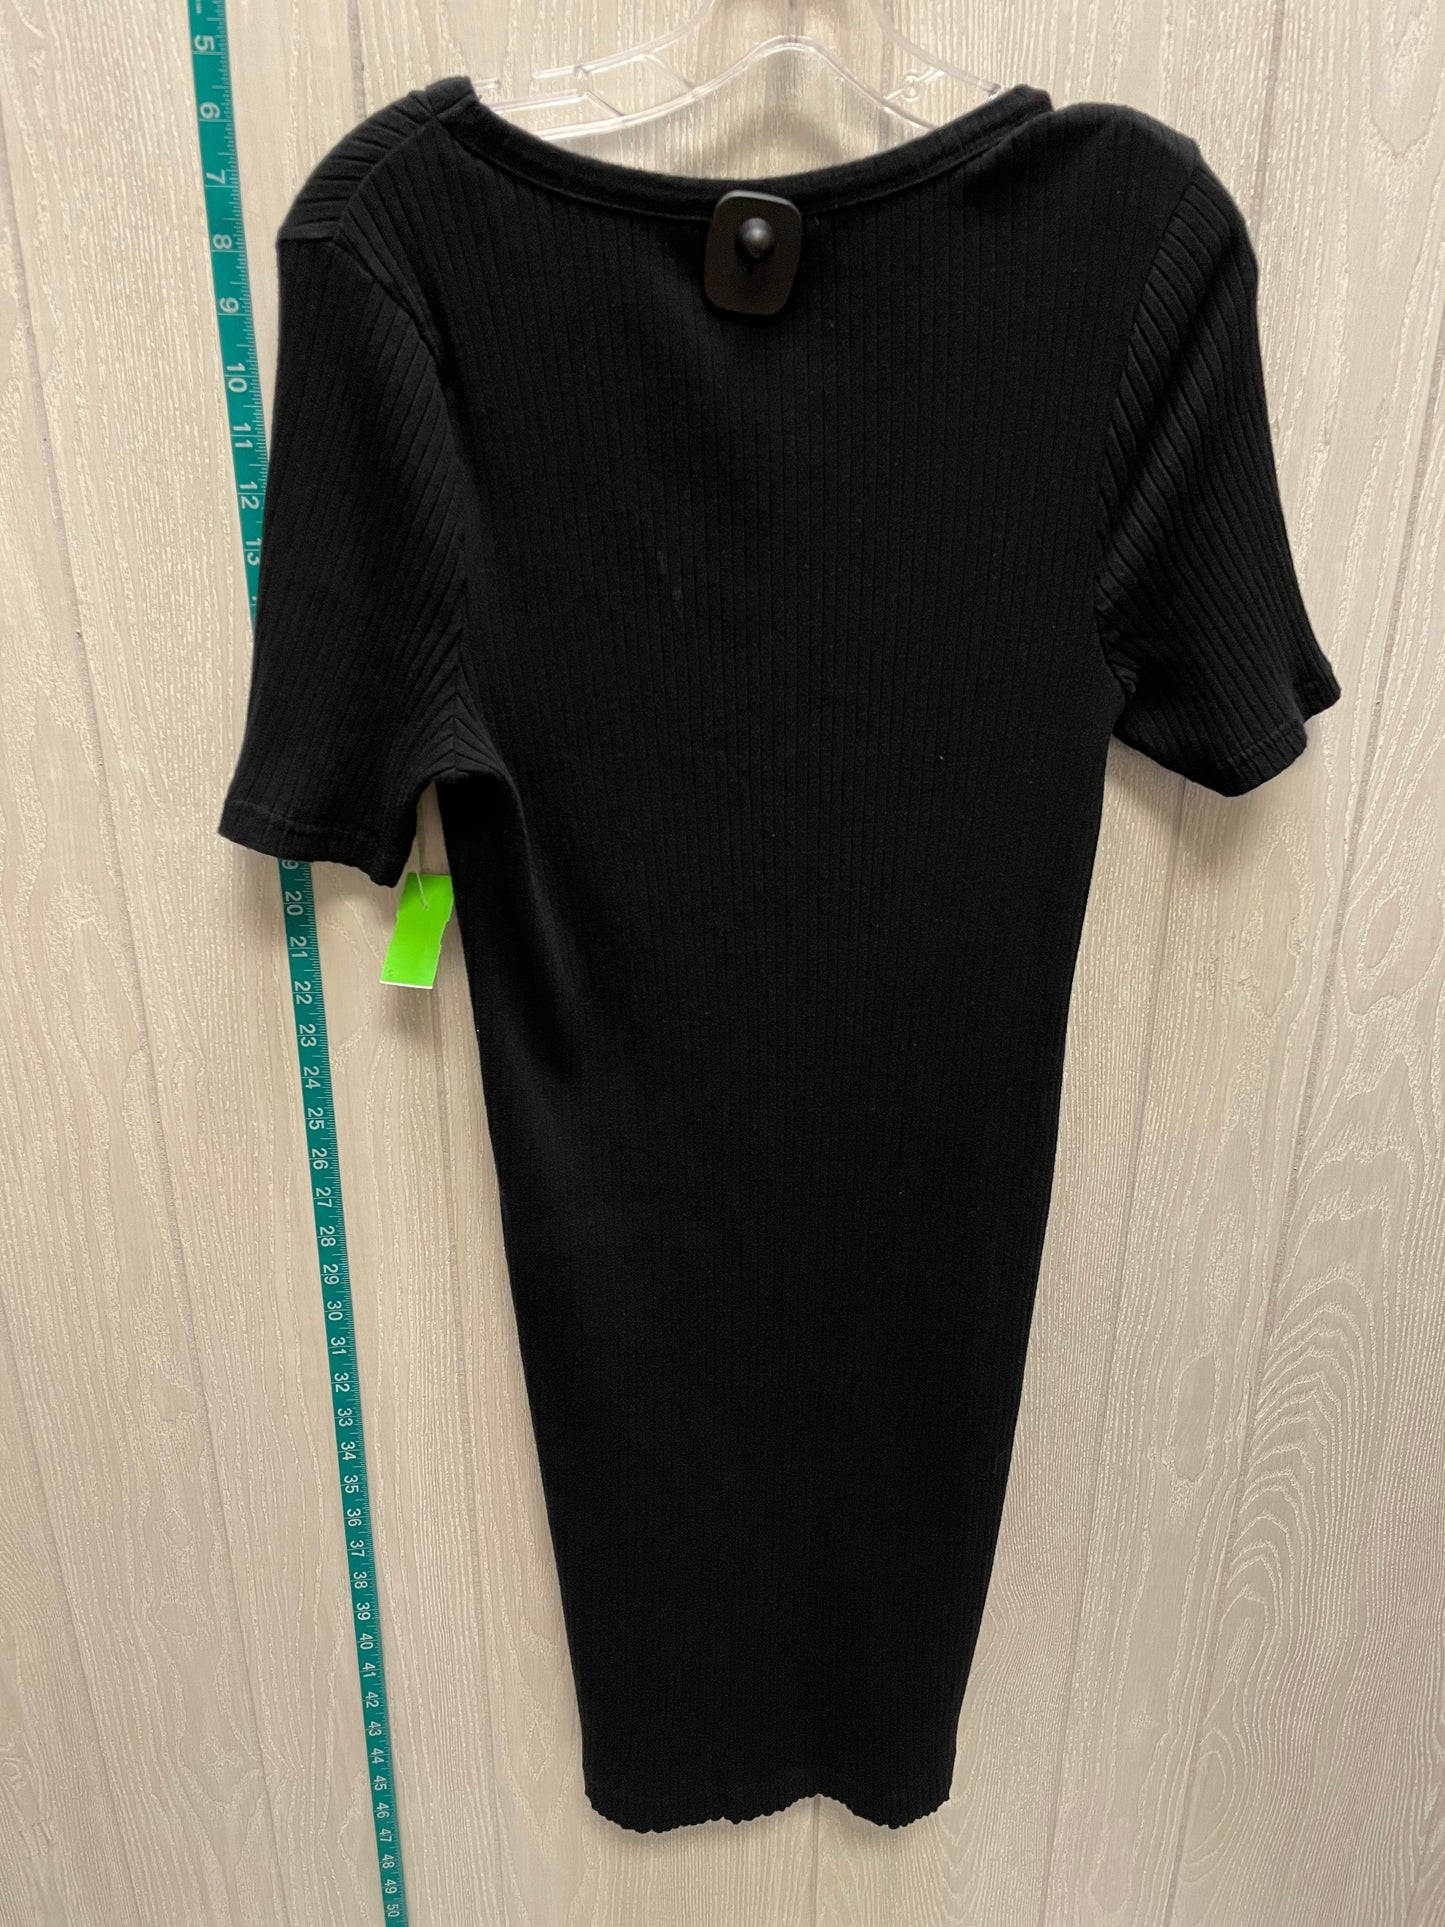 Black Dress Casual Short Banana Republic, Size Xl